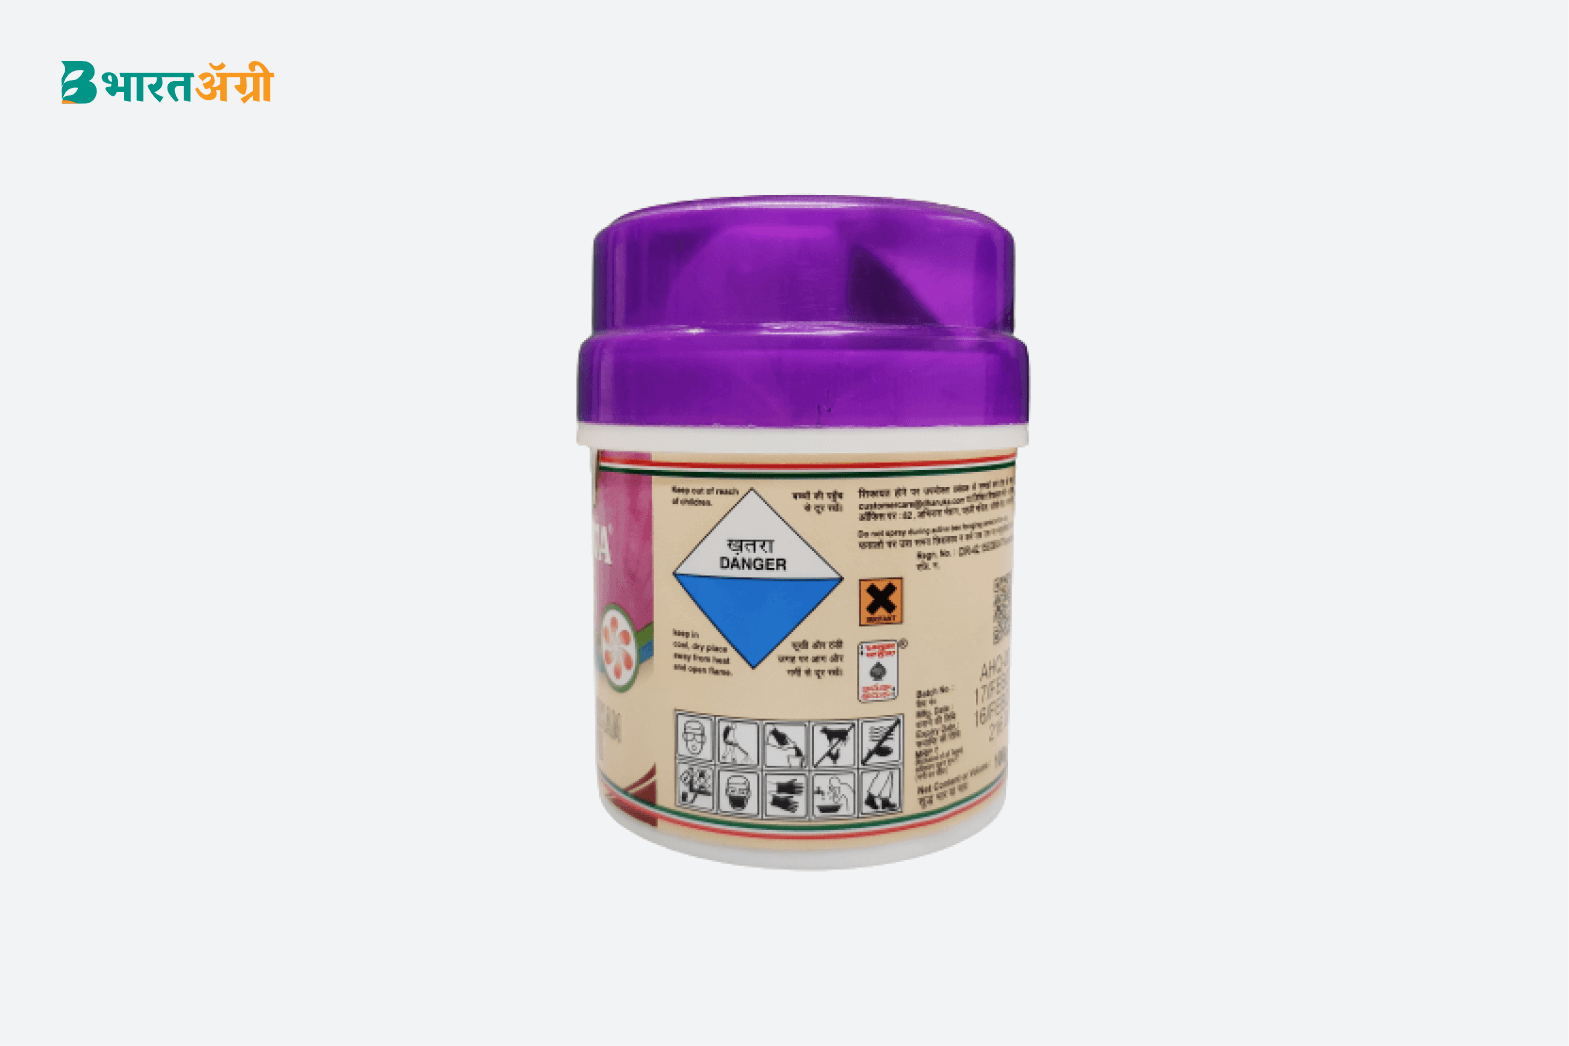 Dhanuka Areva Insecticide | धानुका अरेवा सबसे सस्ता कीटनाशक | Free Delivery